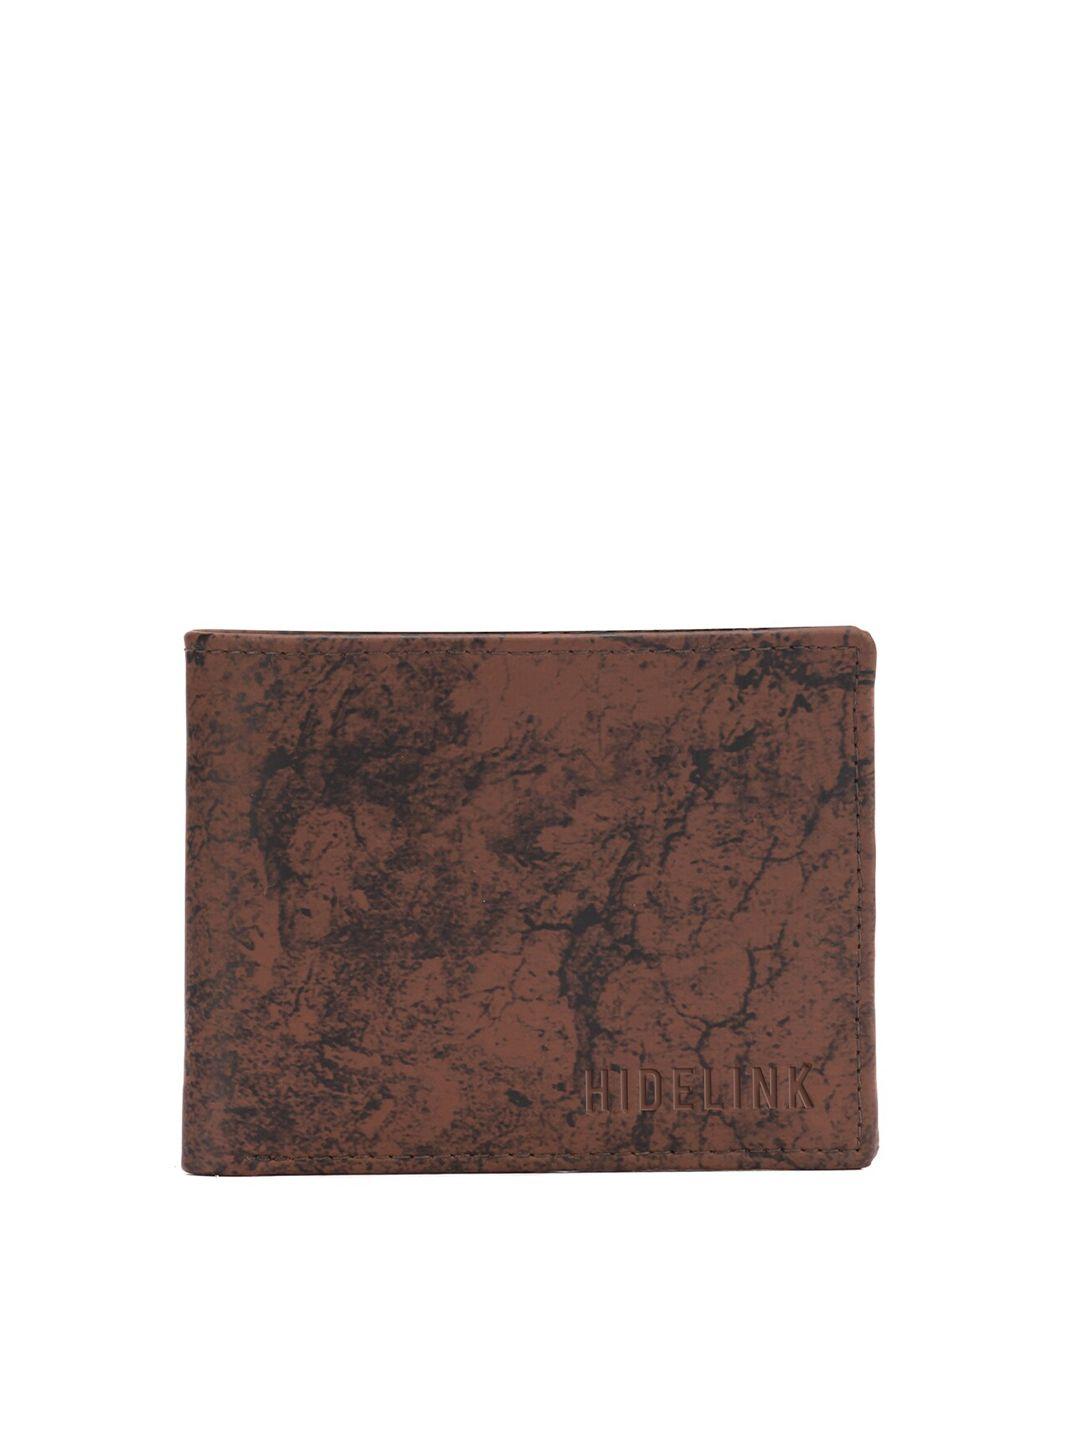 hidelink men brown & black abstract printed pu two fold wallet